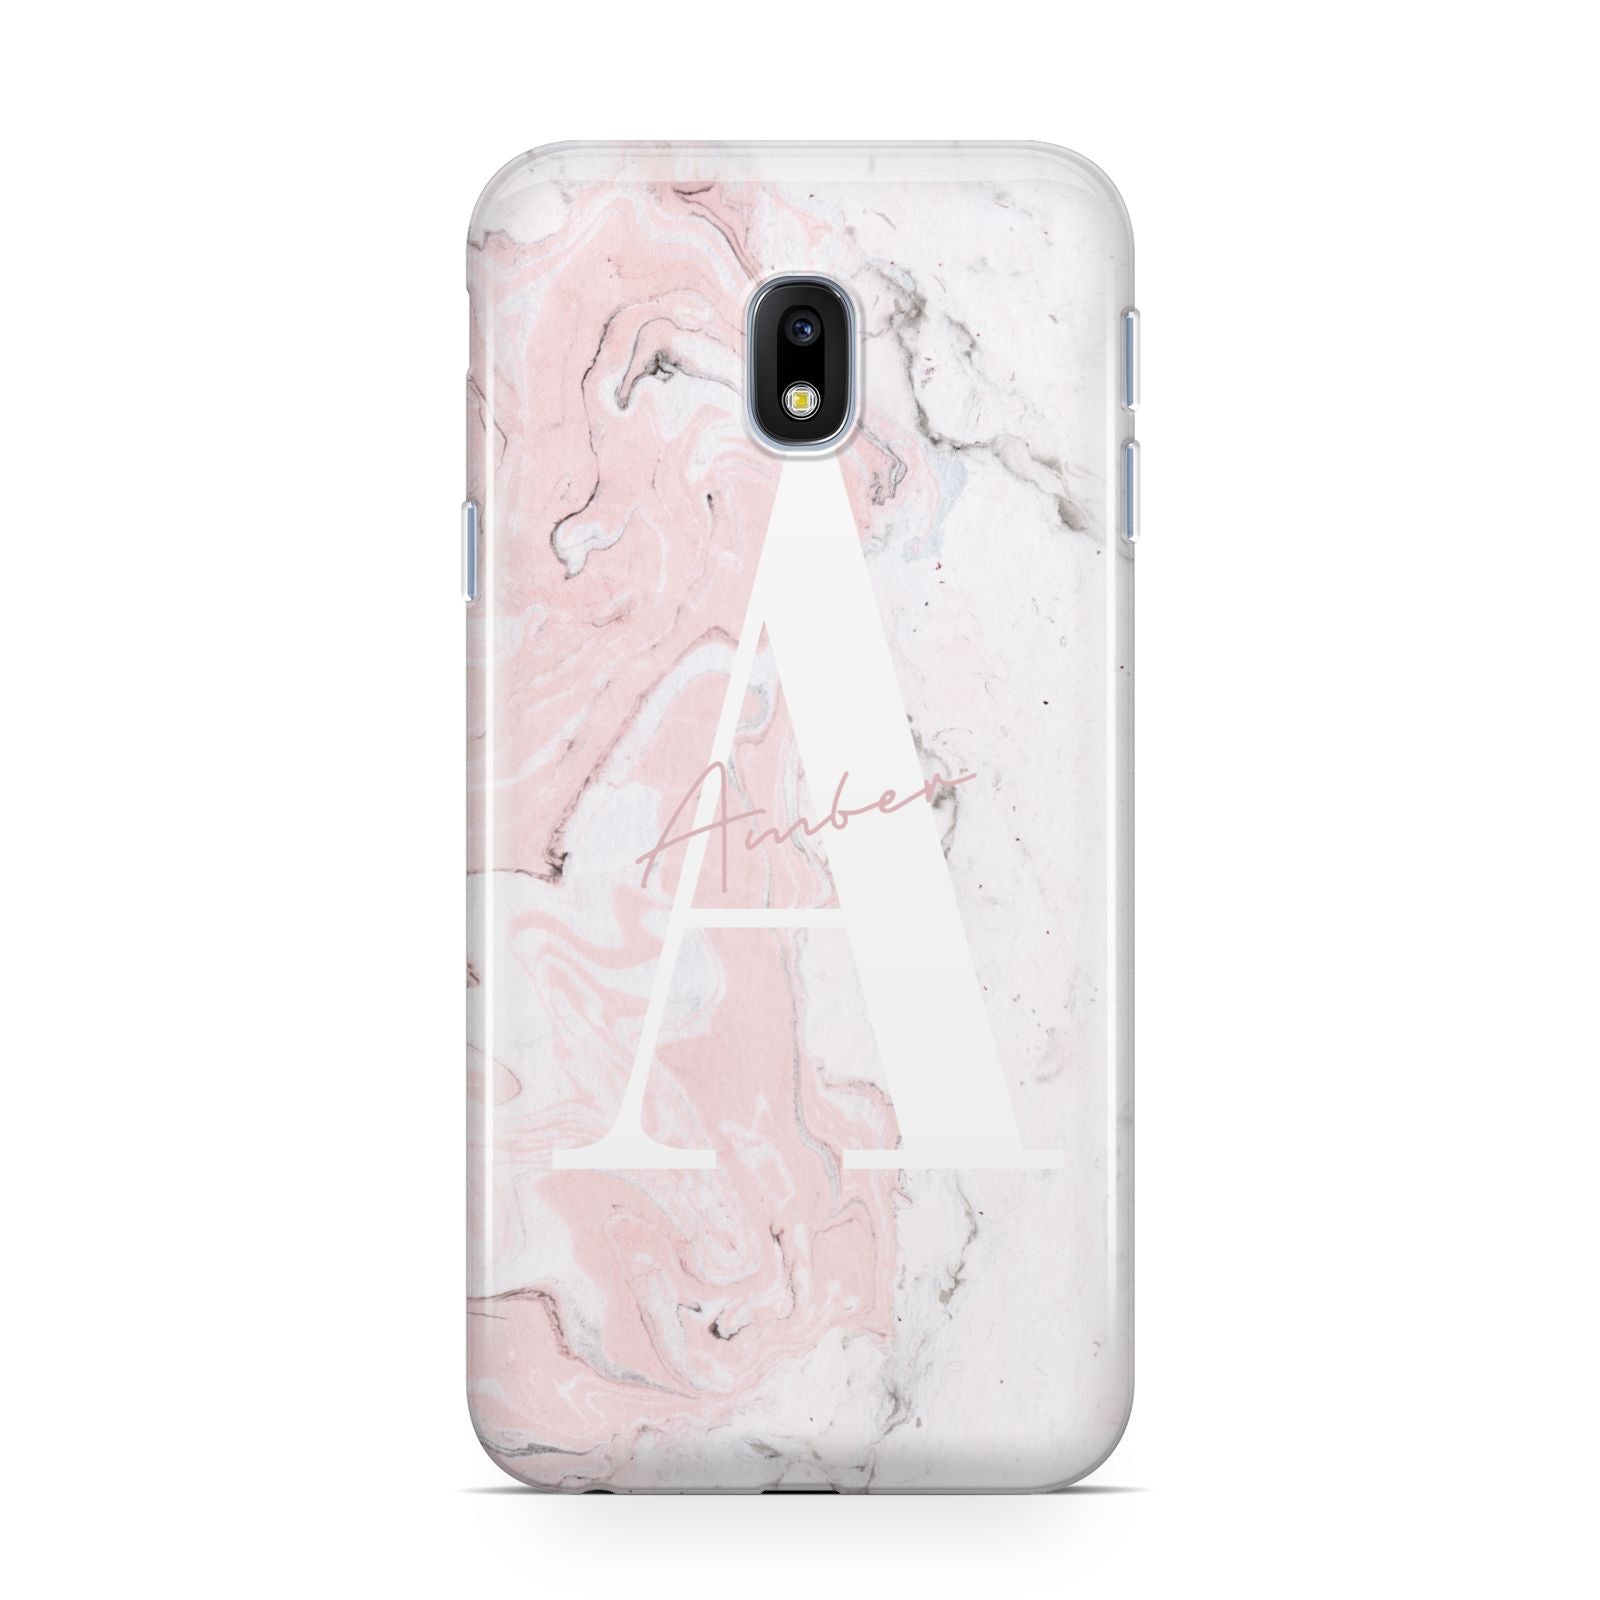 Monogrammed Pink White Ink Marble Samsung Galaxy J3 2017 Case